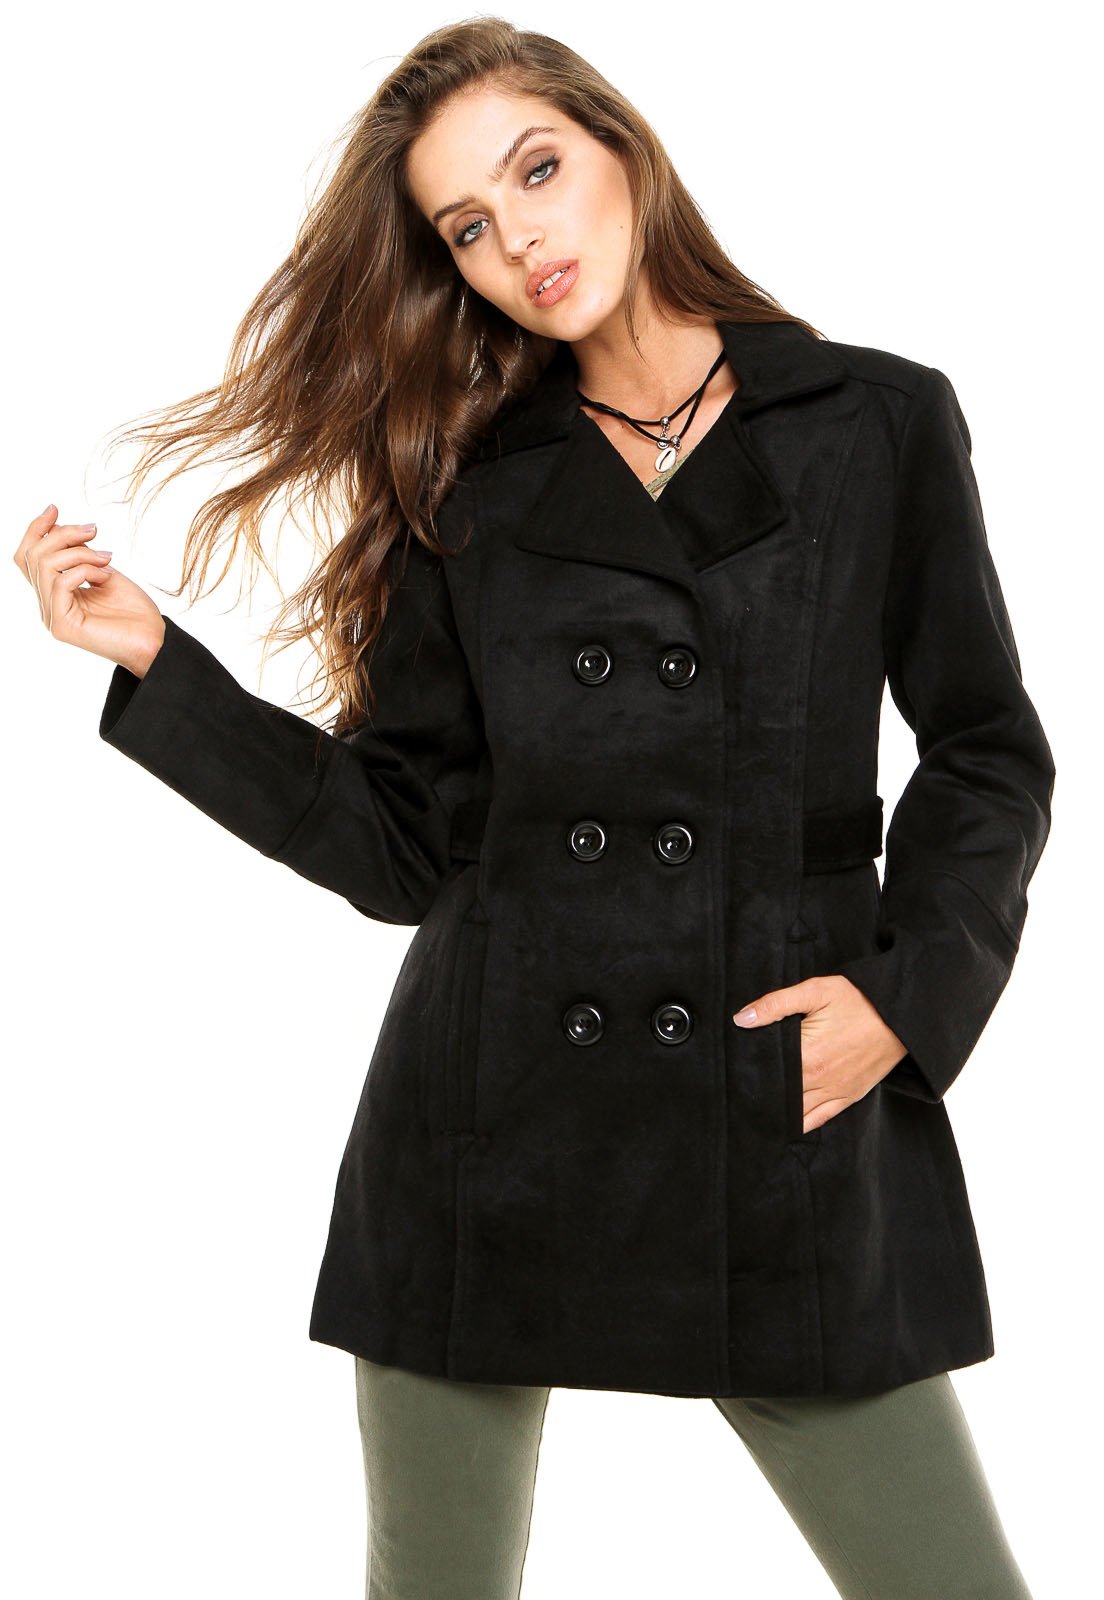 casaco sobretudo feminino preto